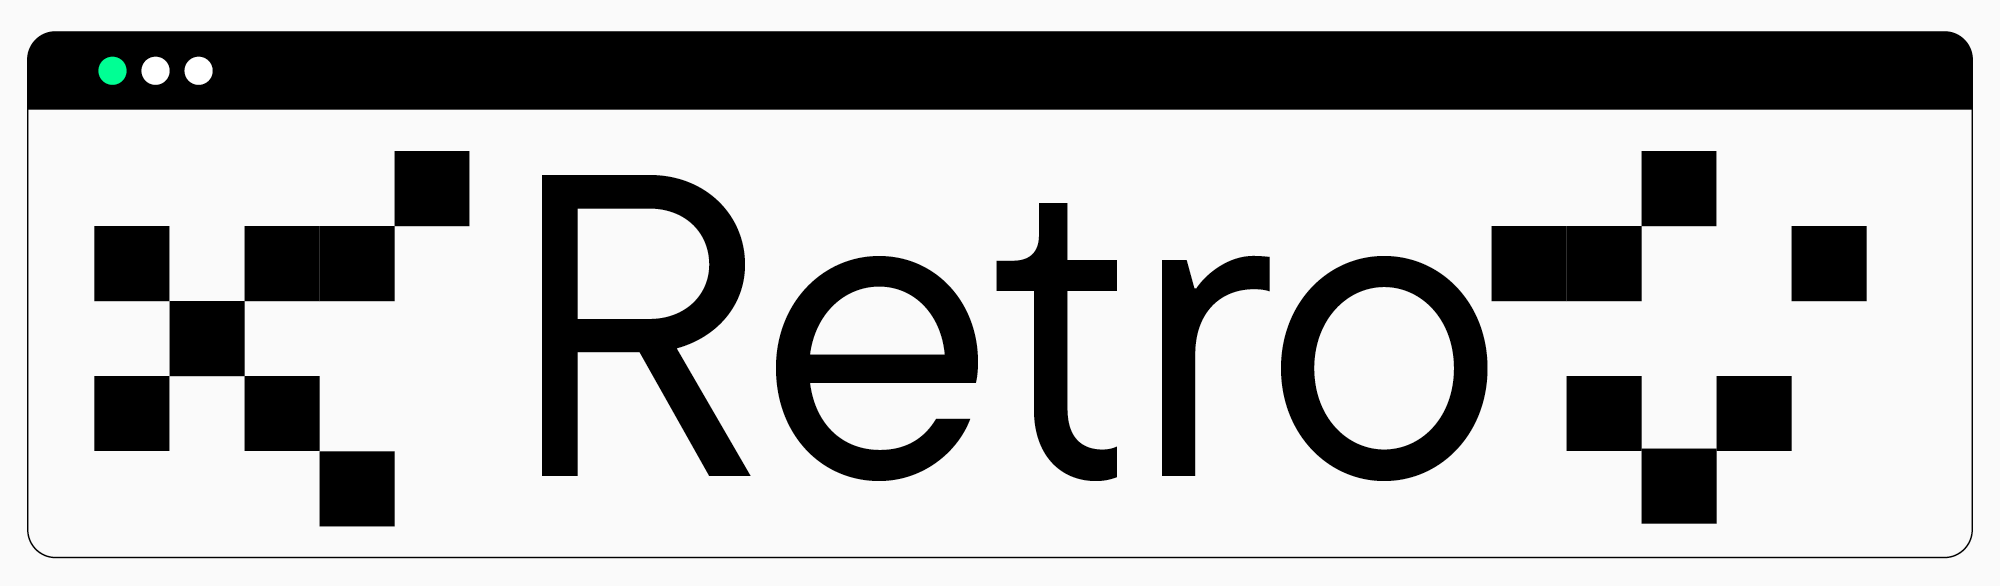 Retro gaming fonts